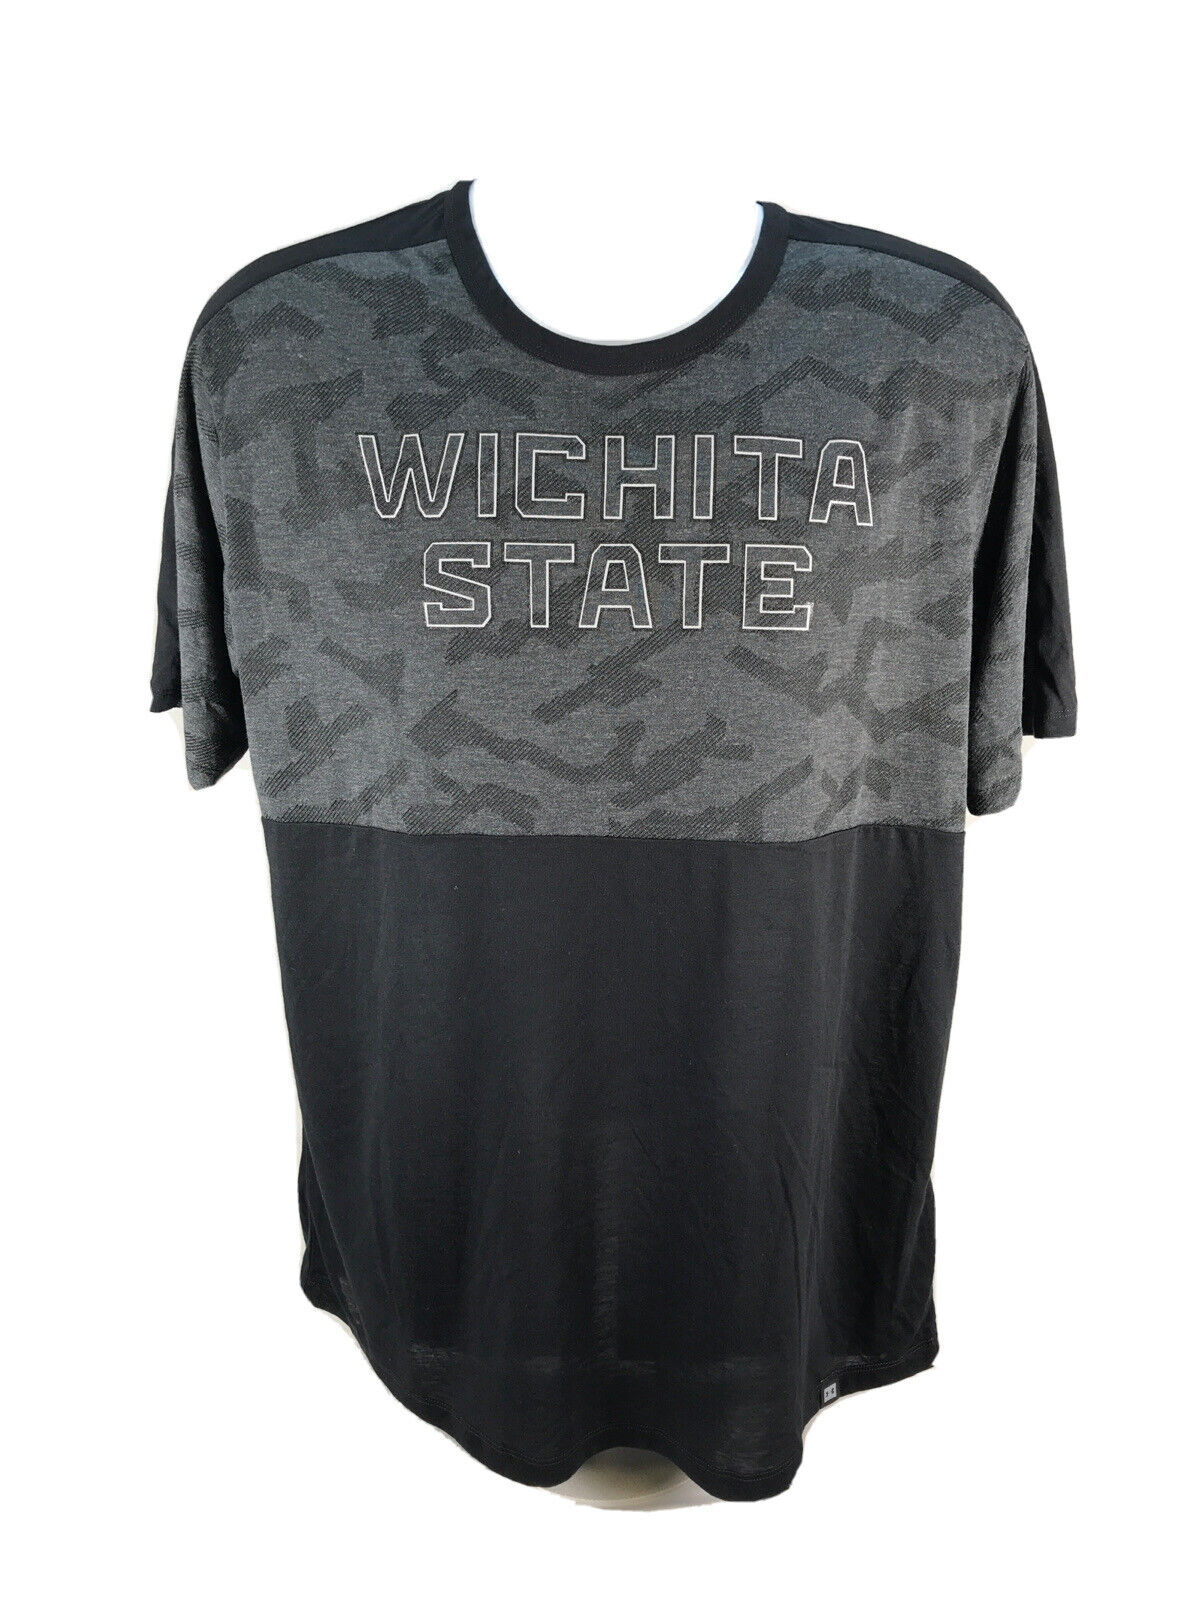 NEW Under Armour Men Black Wichita State Seamless Short Sleeve Shirt Sz L